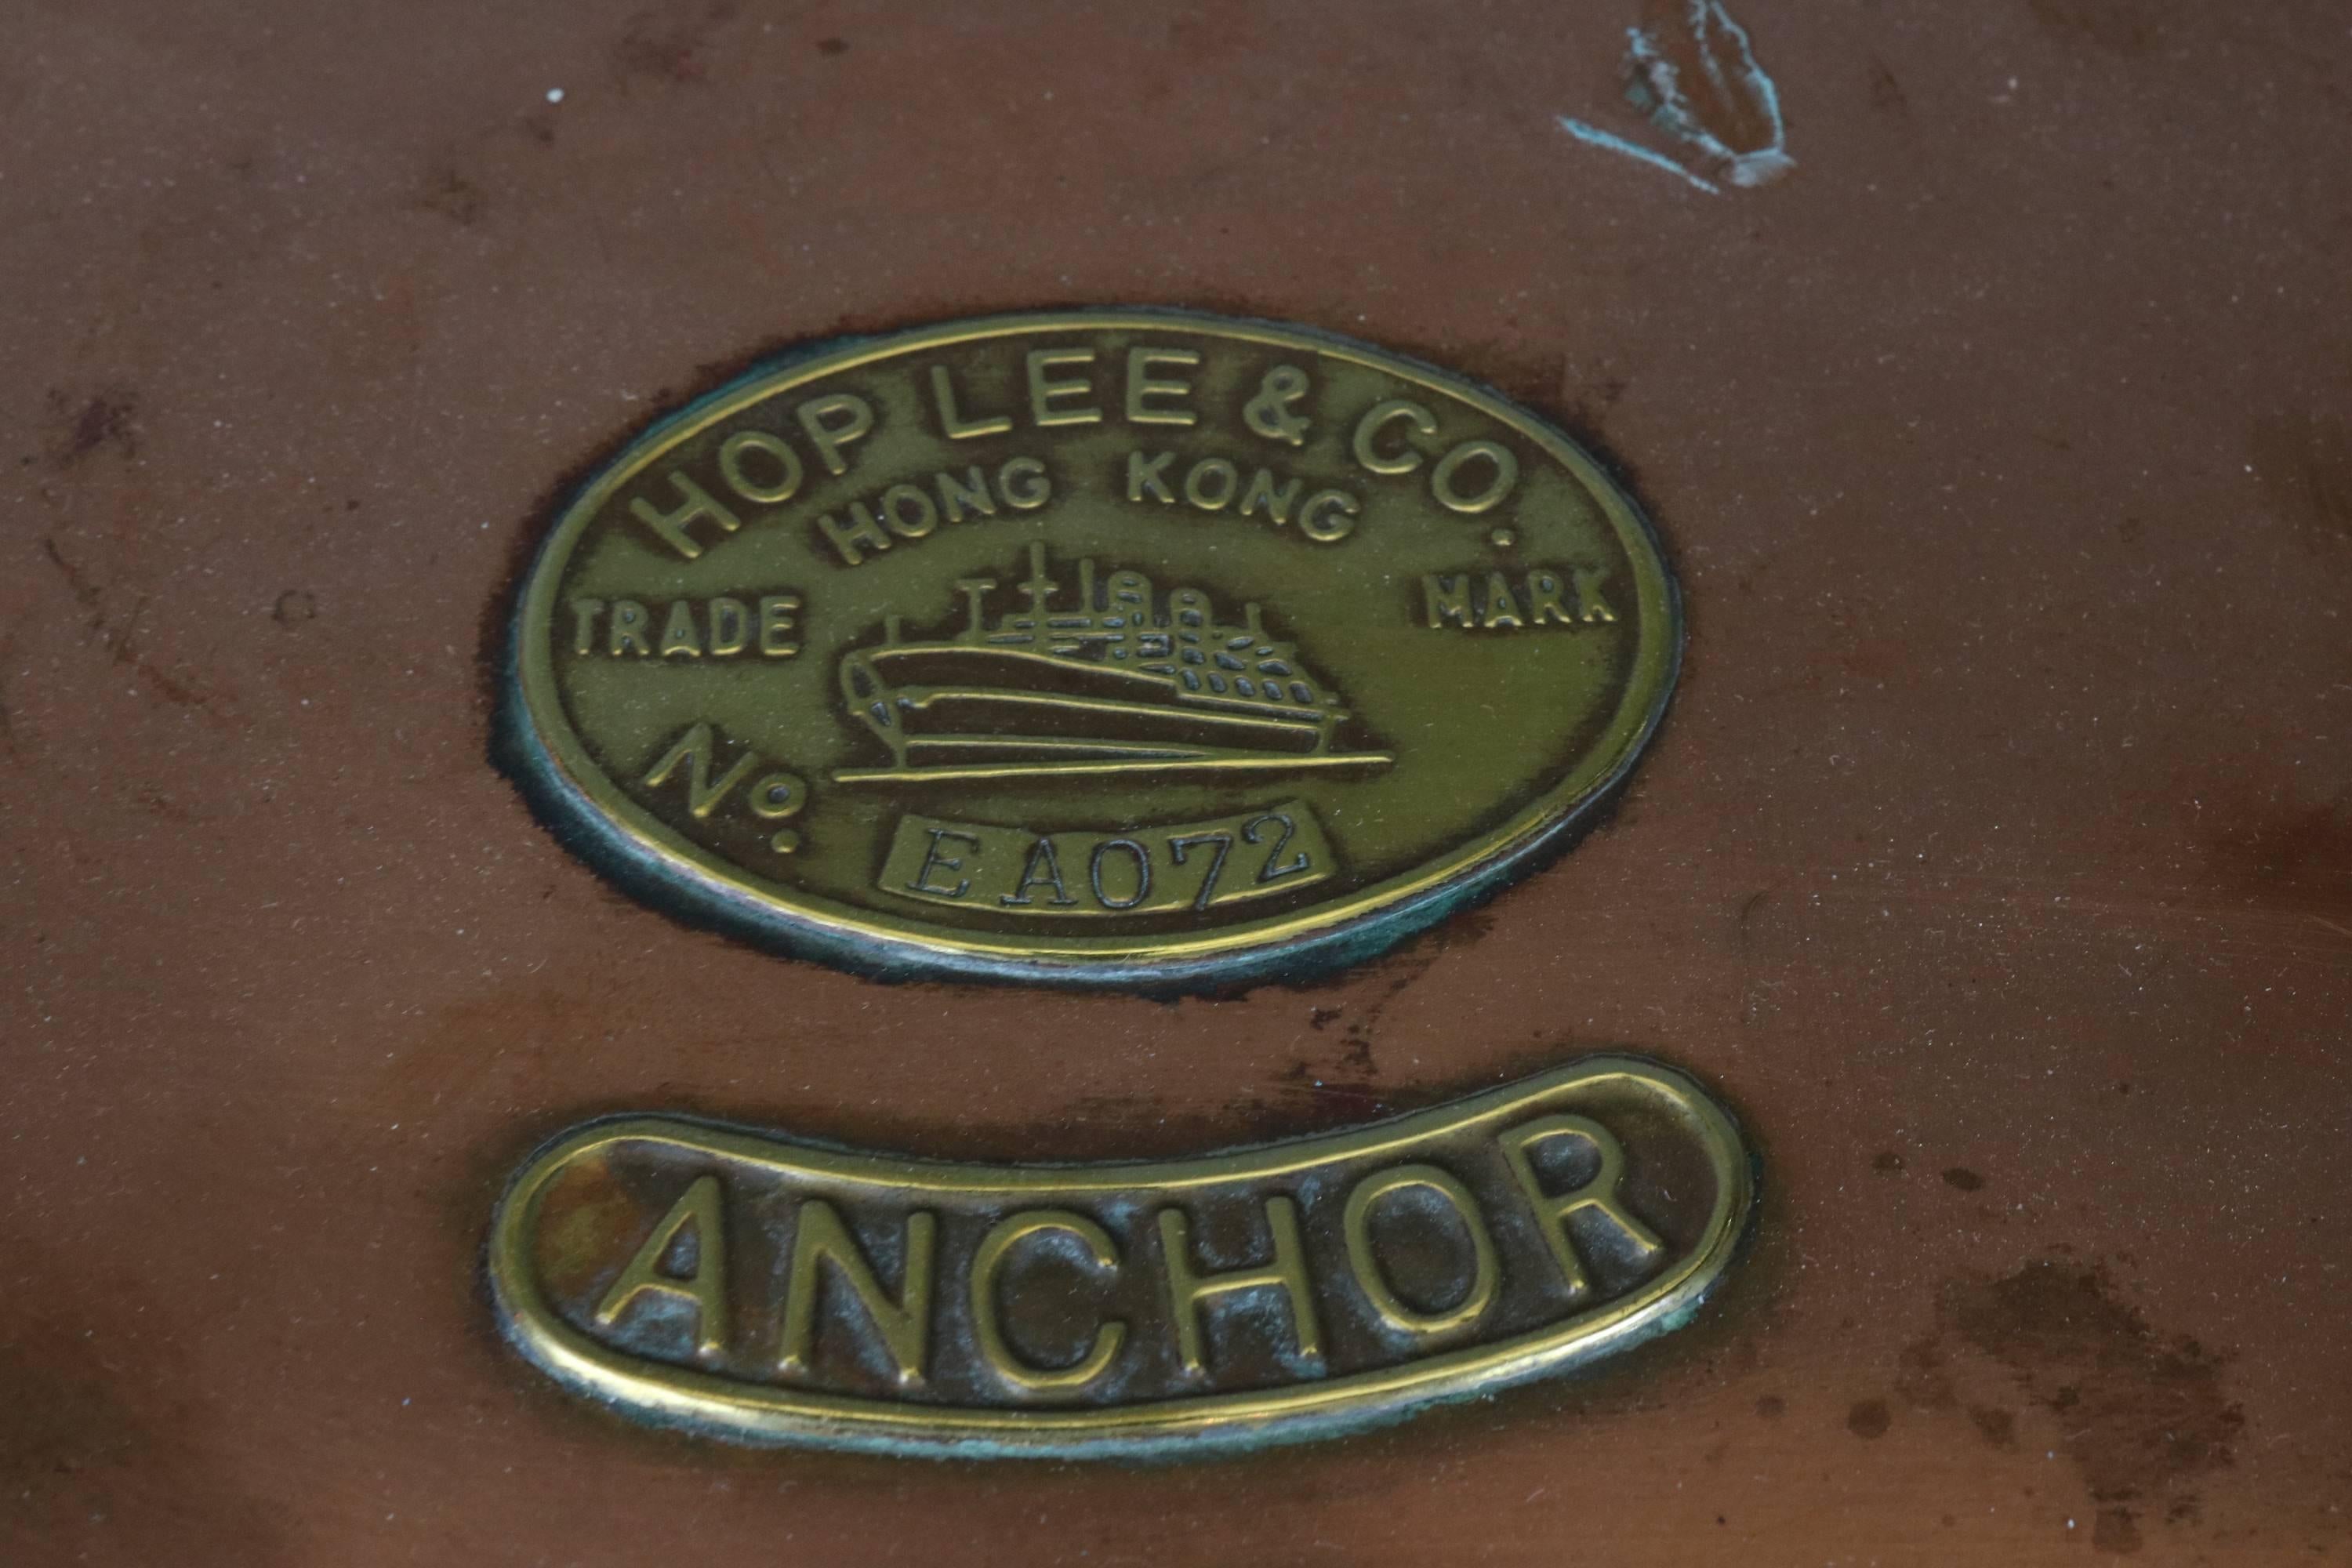 Copper anchor lantern with brass maker's badge from Hop Lee & Co., Hong Kong. Fresnel glass lens, brass bars, hoisting handle, etc. 

Measures: 14" high x 11" diameter.

